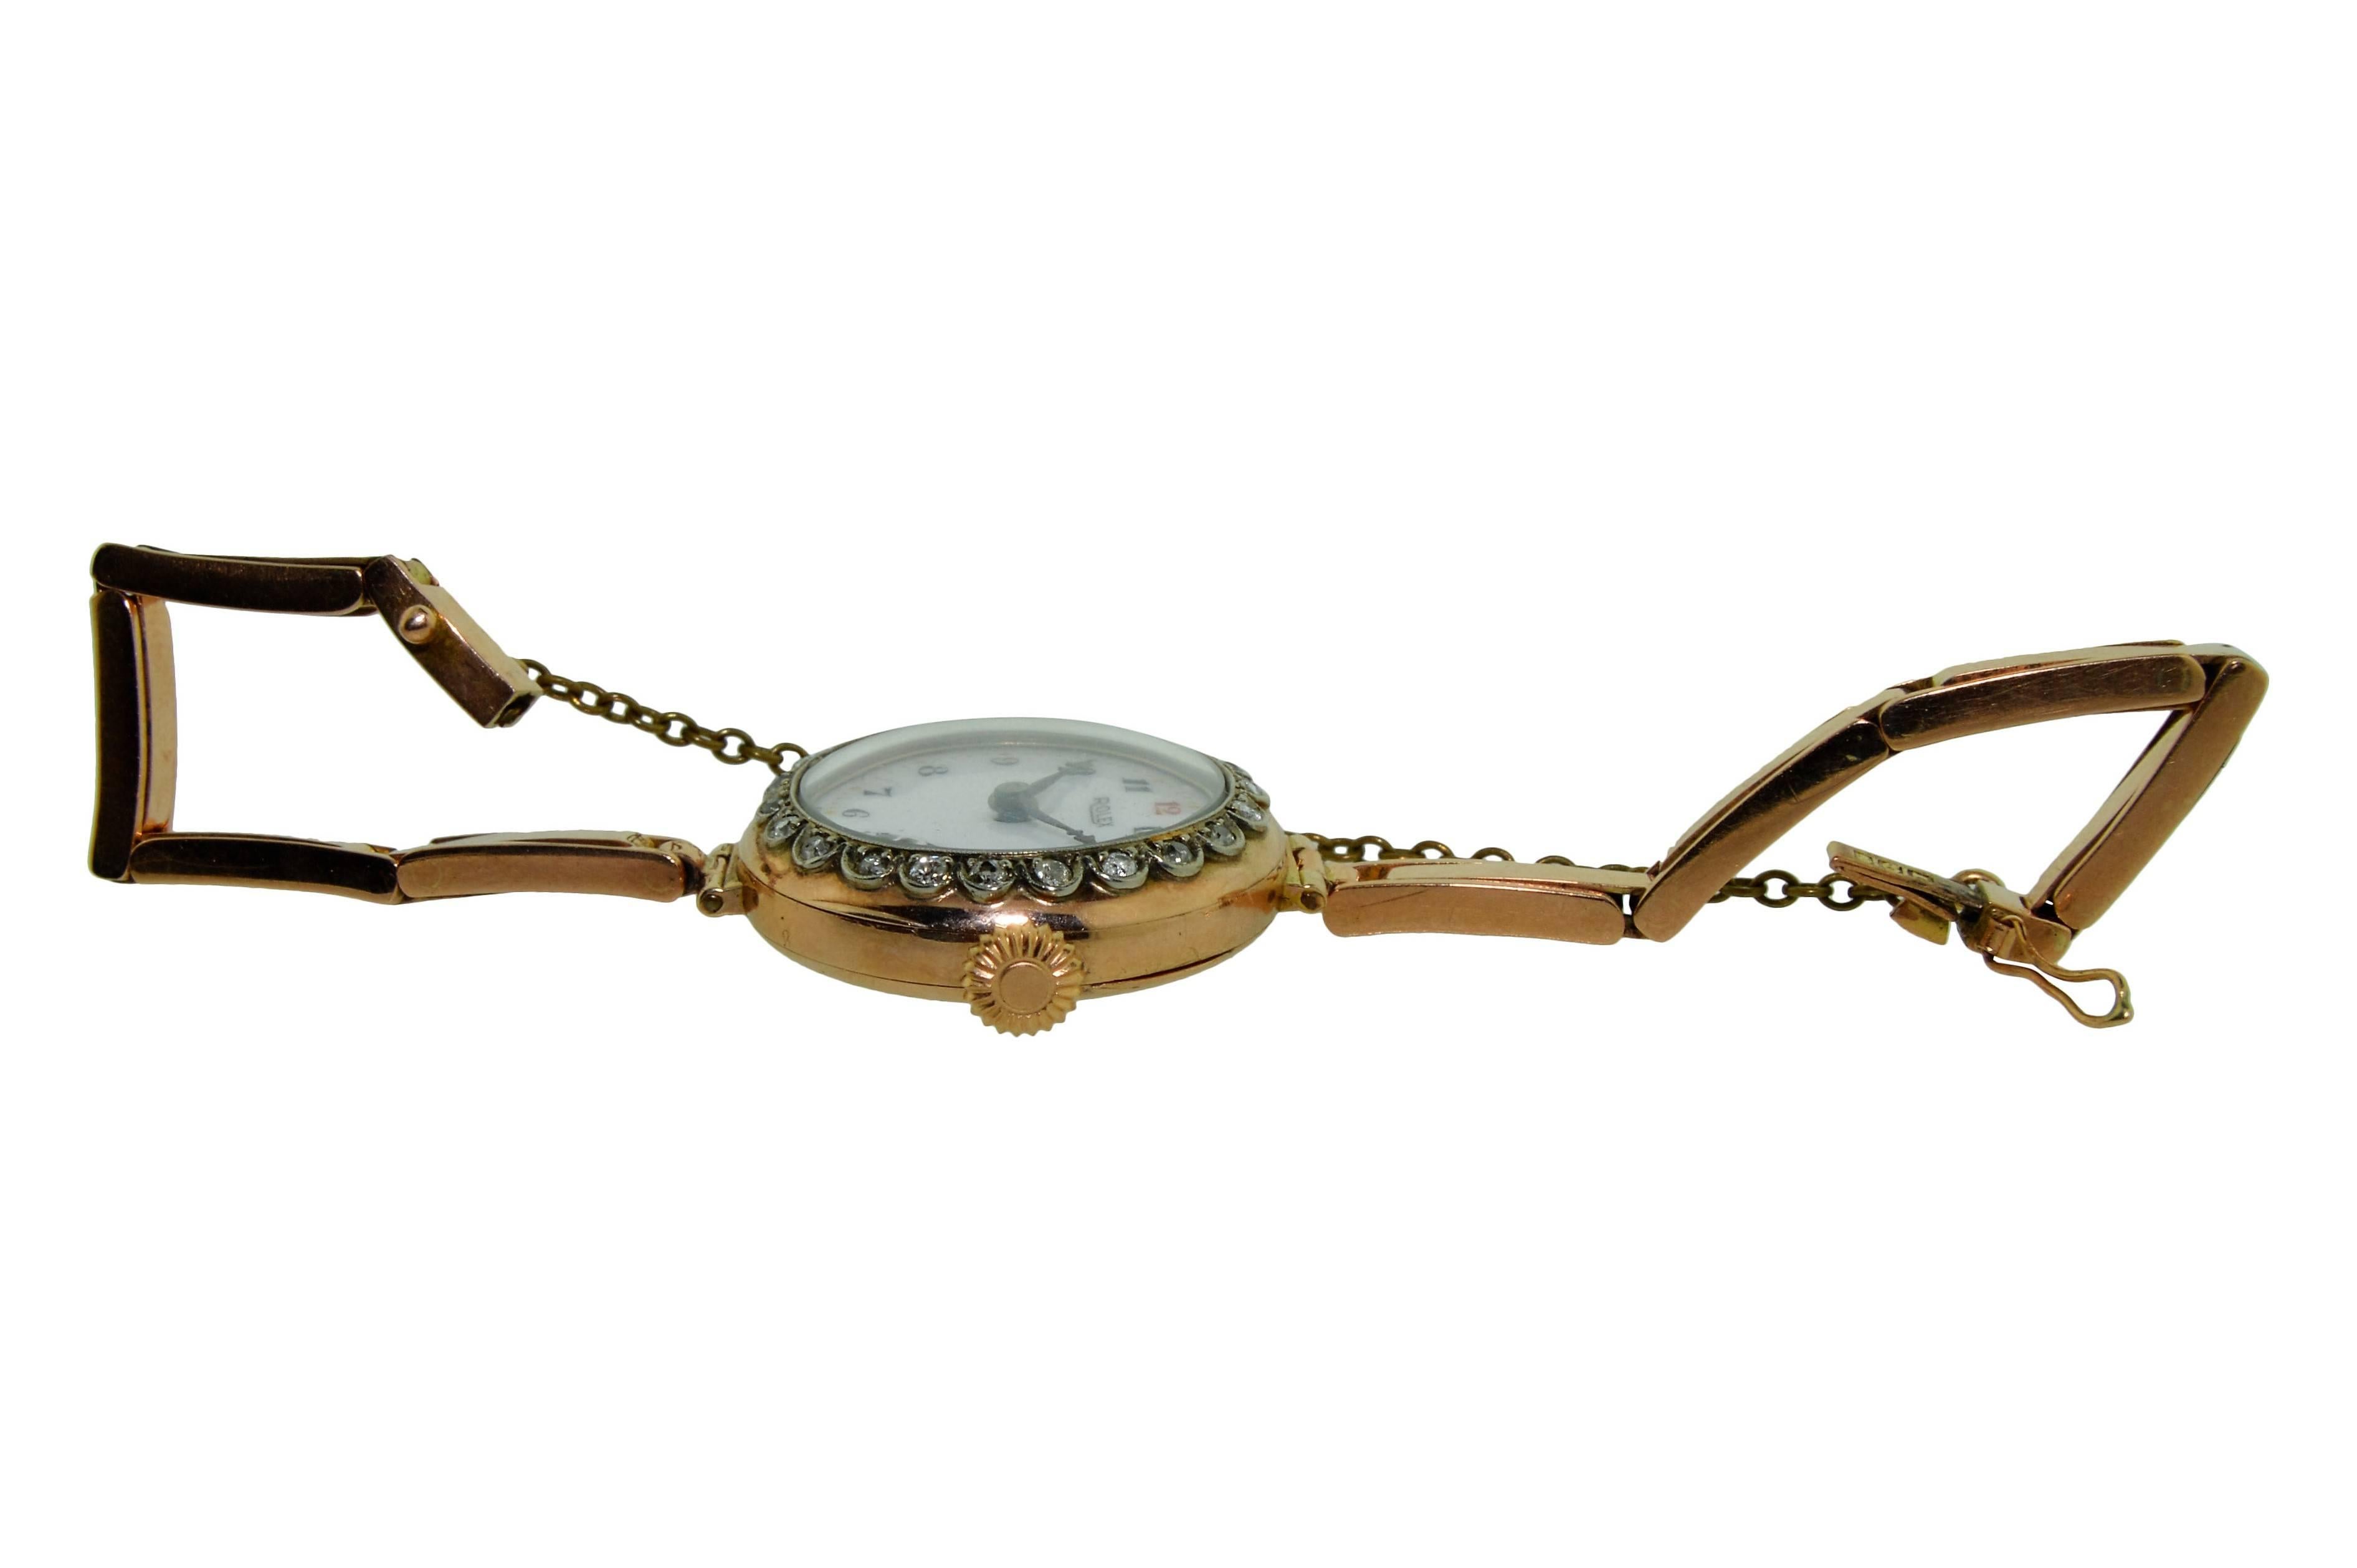 FACTORY / HOUSE: Rolex Watch Company
STYLE / REFERENCE: Bracelet /  Diamond Bezel / Evening Watch
CIRCA: 1915
MOVEMENT / CALIBER: 7 Jewels / Reberg Caliber
DIAL / HANDS: Original Enamel Arabic Numbers / Original Blued Steel
DIMENSIONS:   27mm